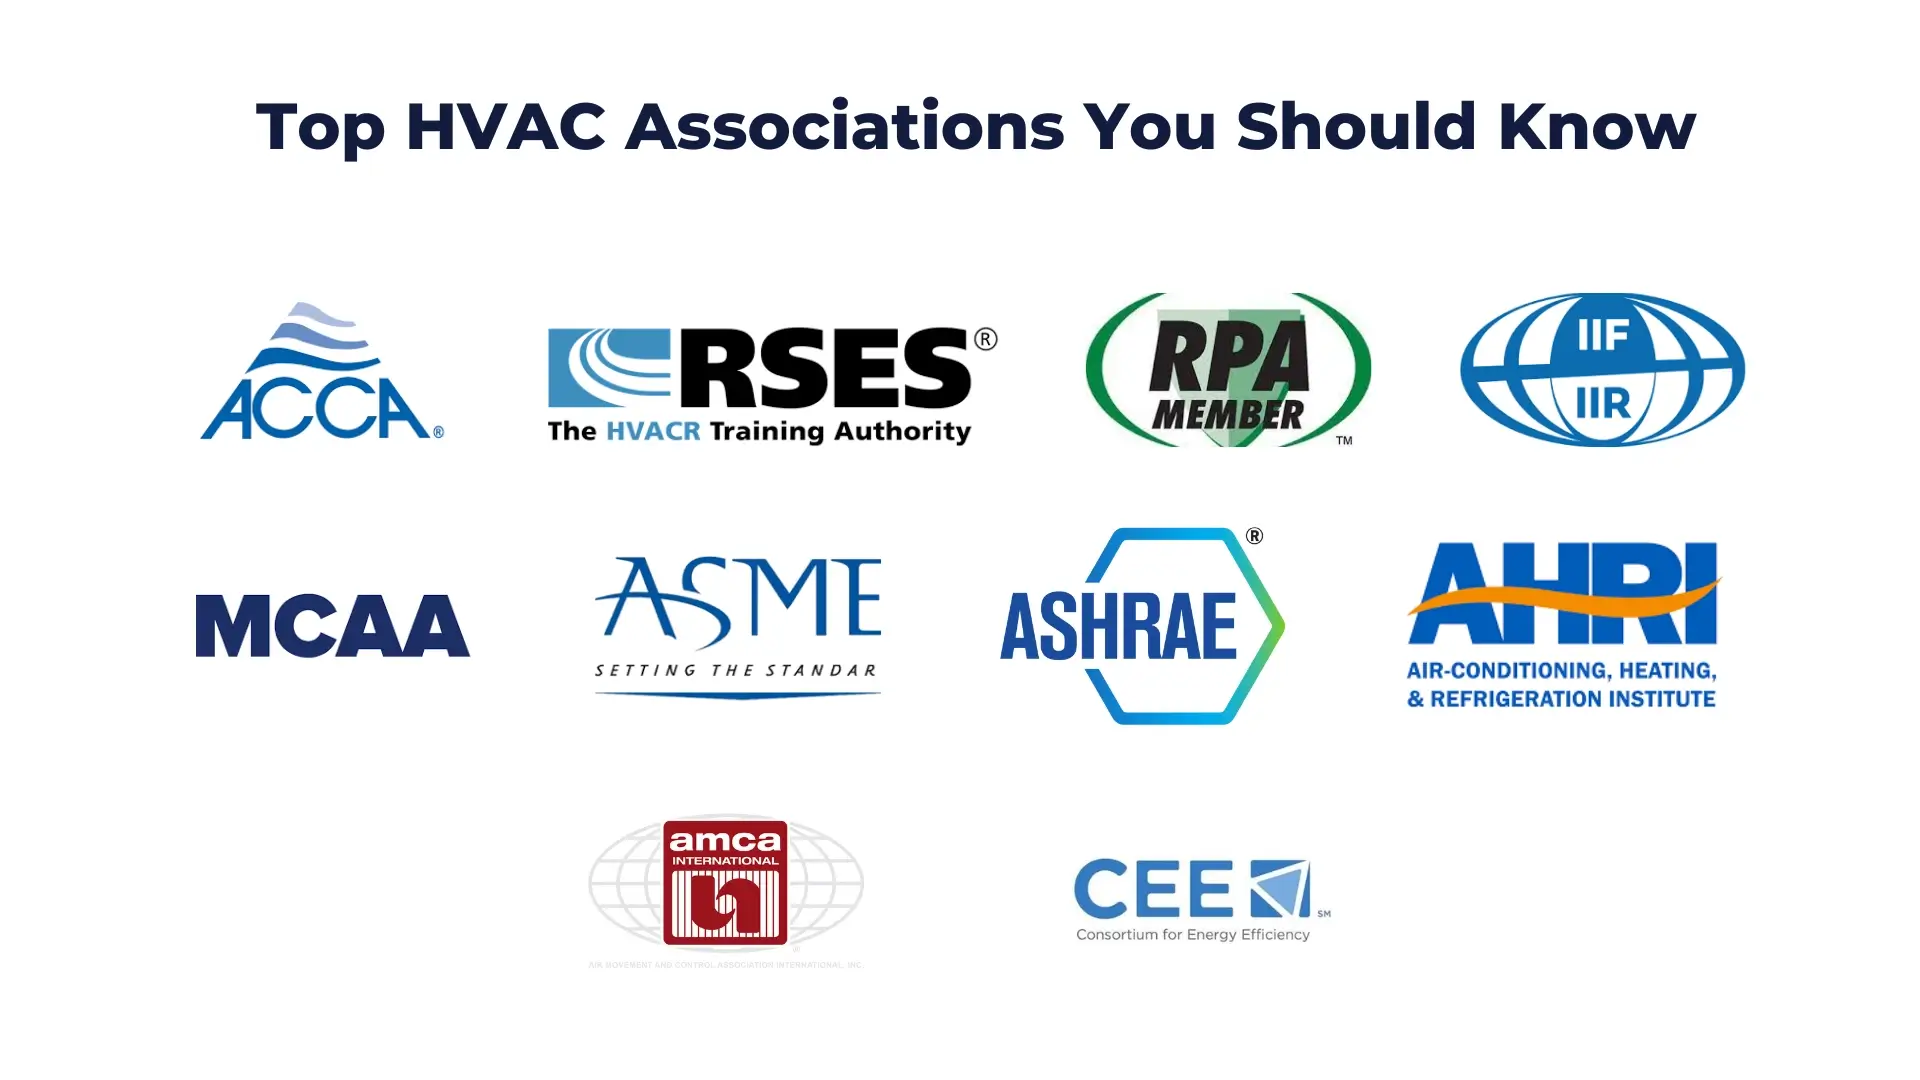 Top HVAC Associations You Should Know